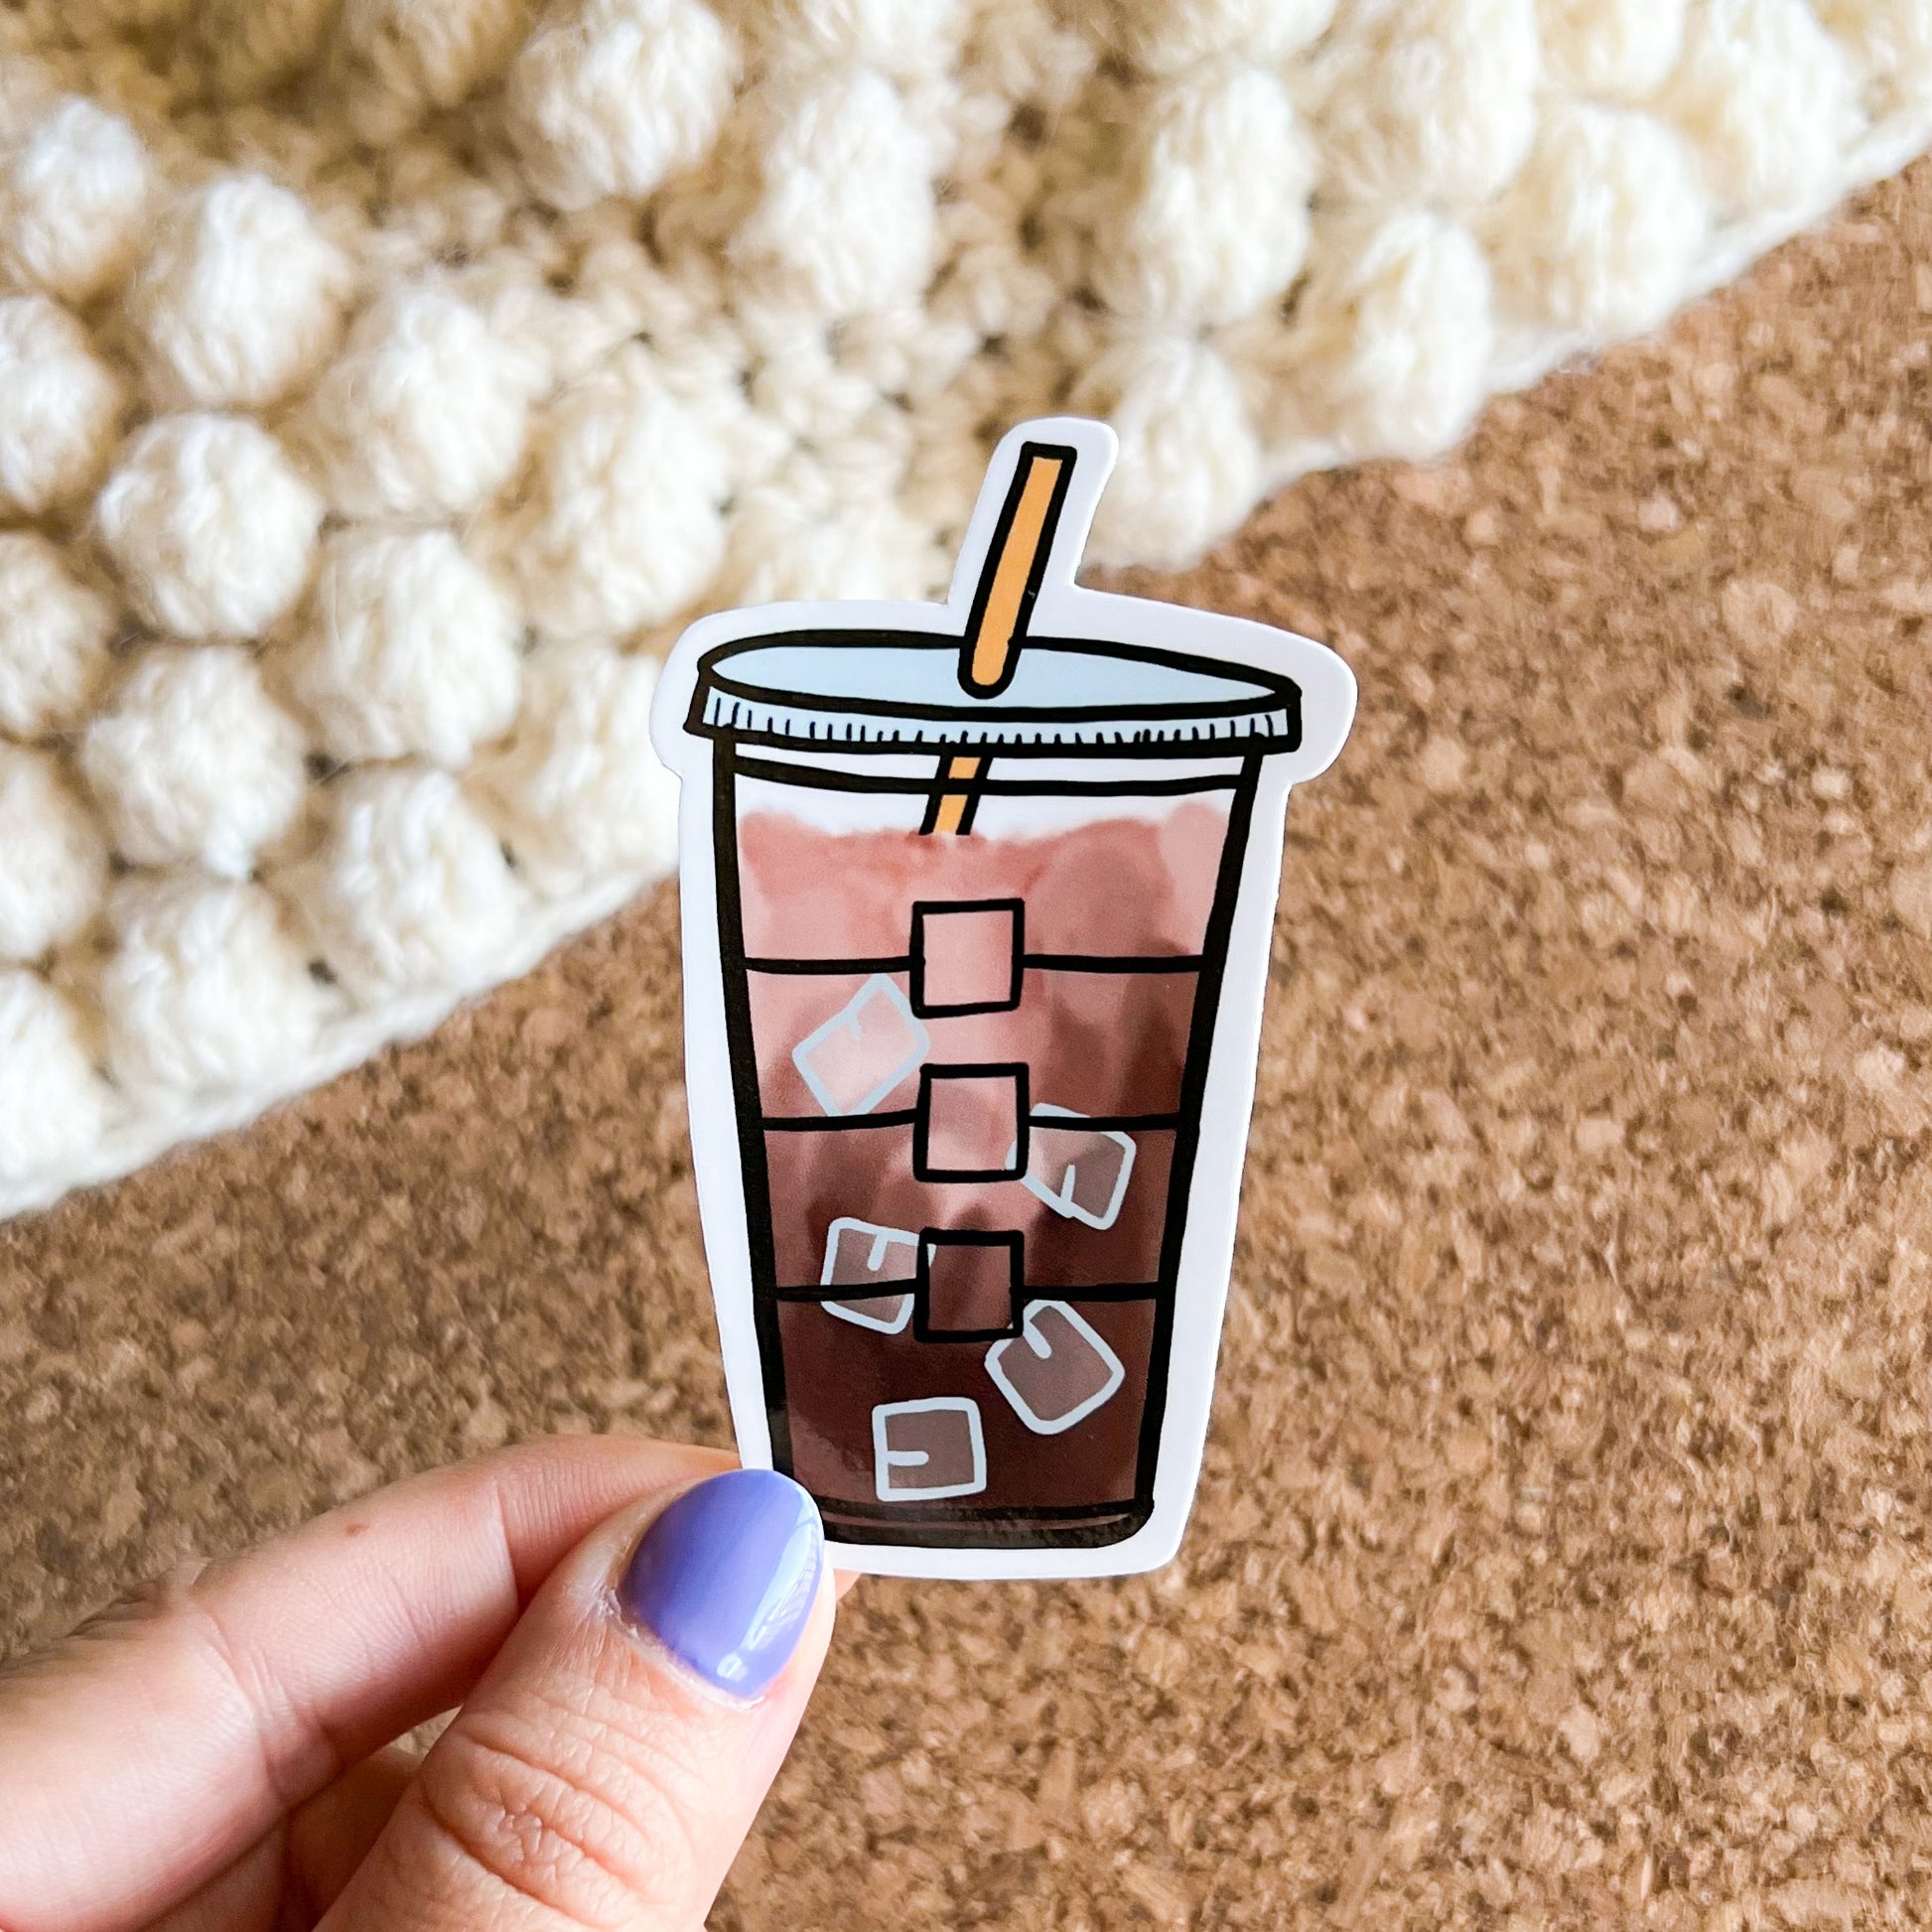 The Iced Coffee Sticker